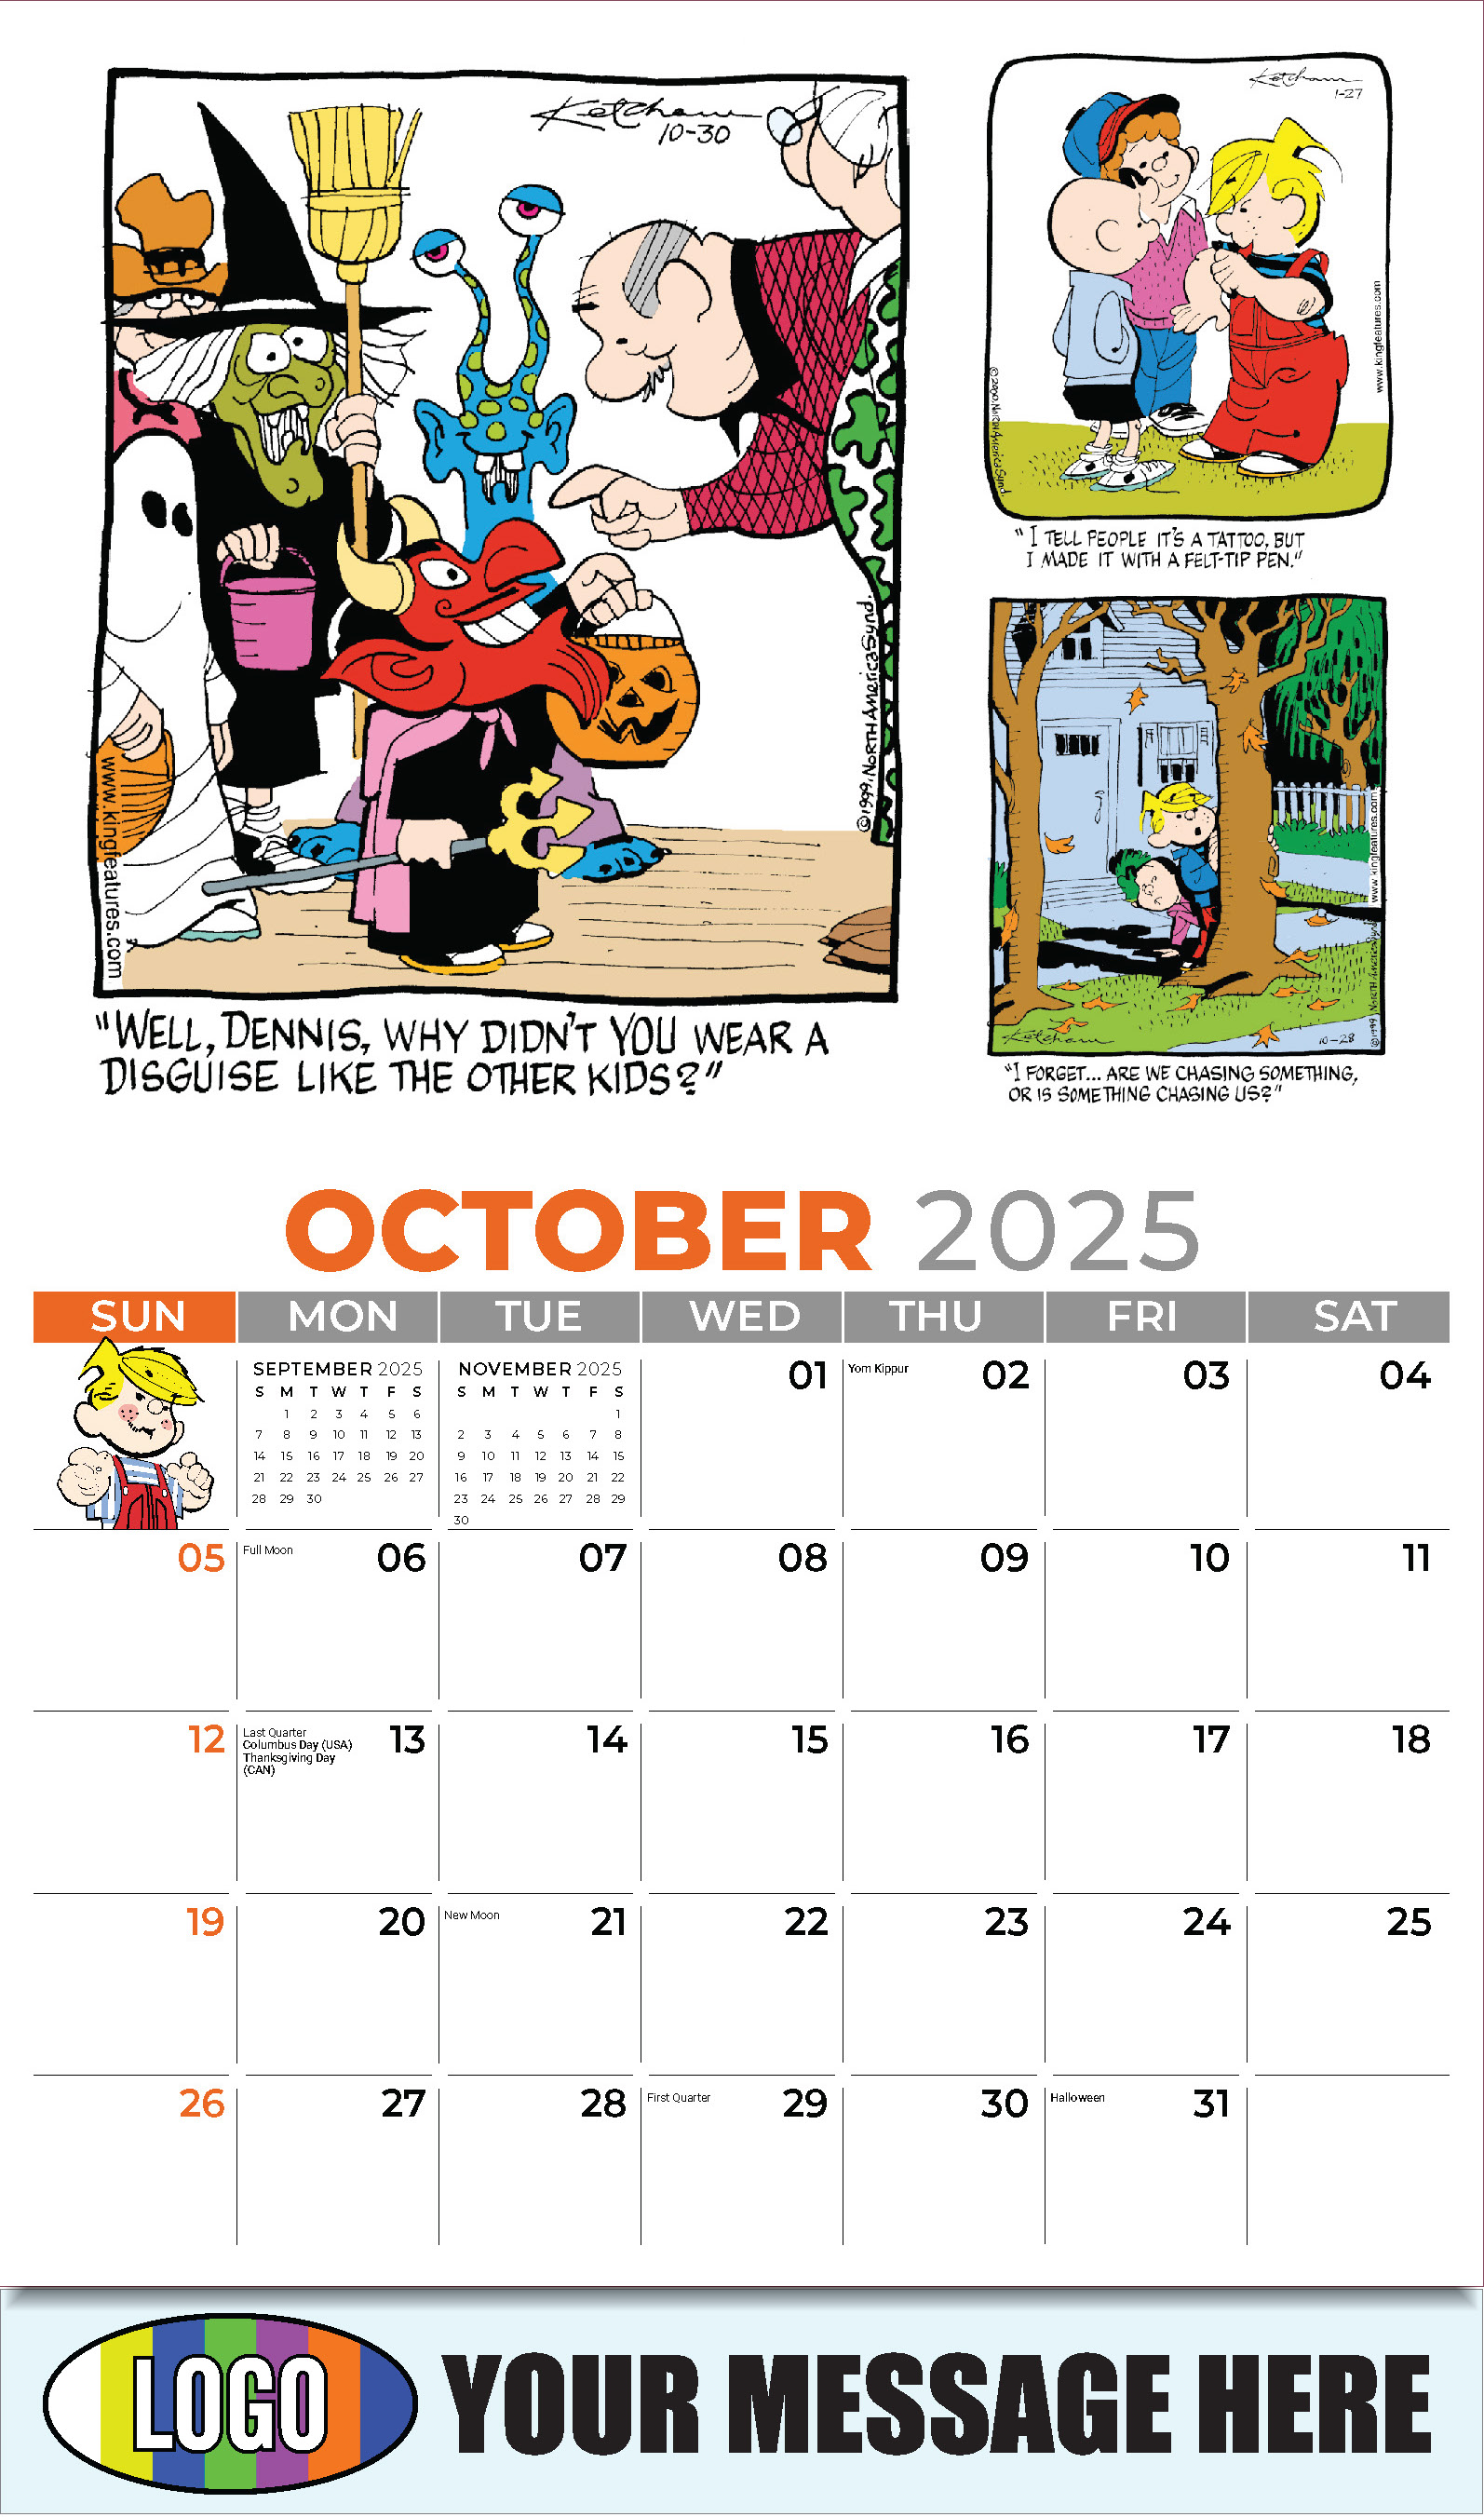 Dennis the Menace 2025 Business Promotional Wall Calendar - October